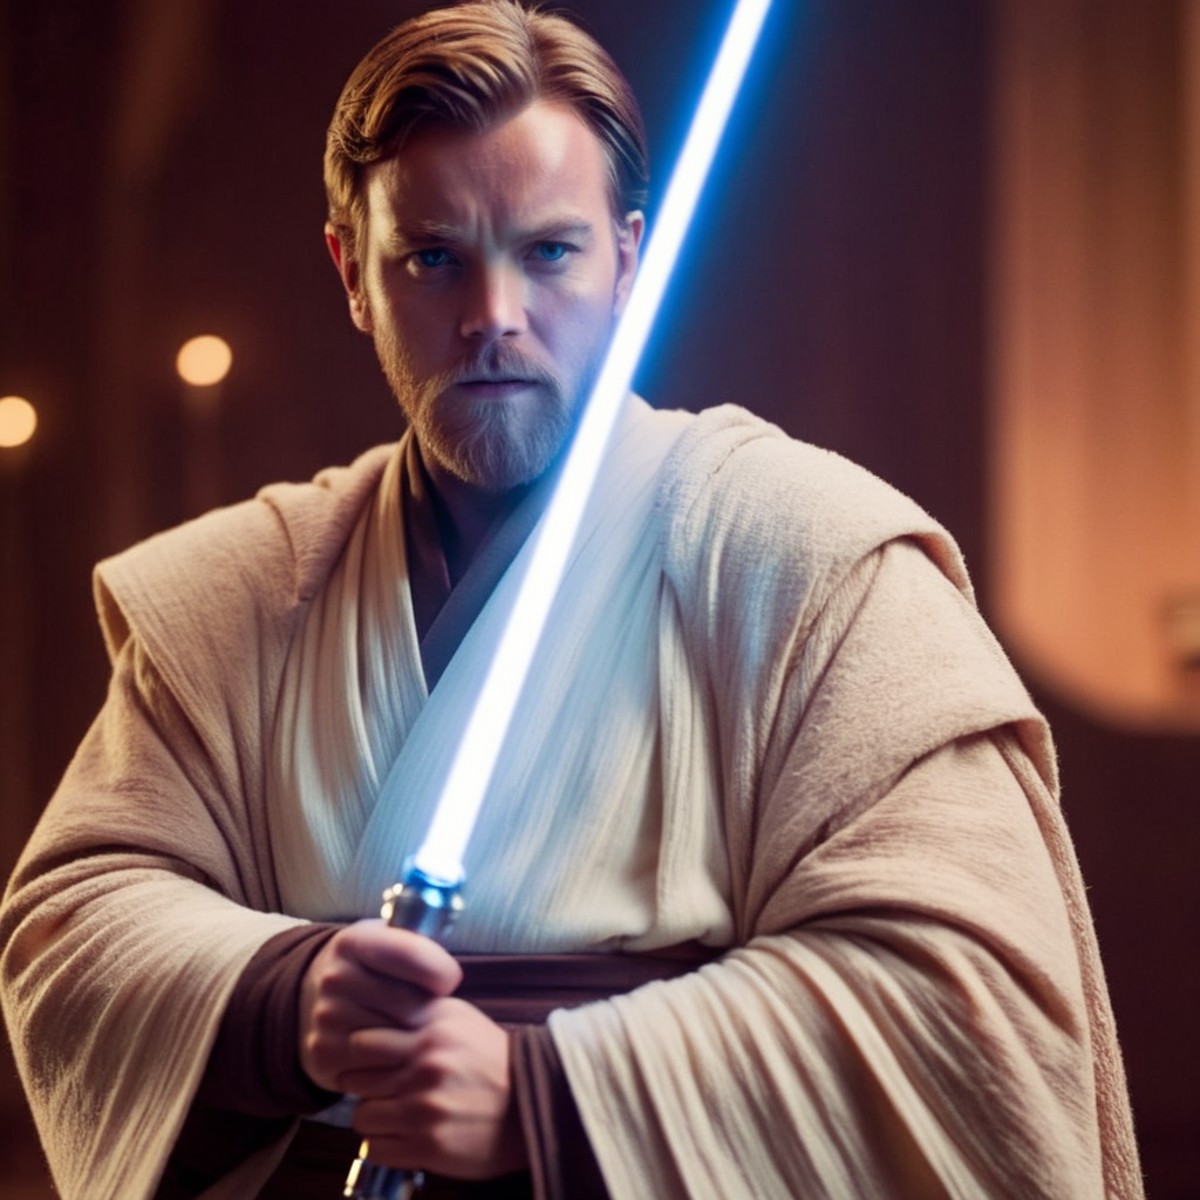 cinematic film still of  <lora:Obi-Wan Kenobi:1.2>
Obi-Wan Kenobi a young man in a jedi costume holding a light saber in s...